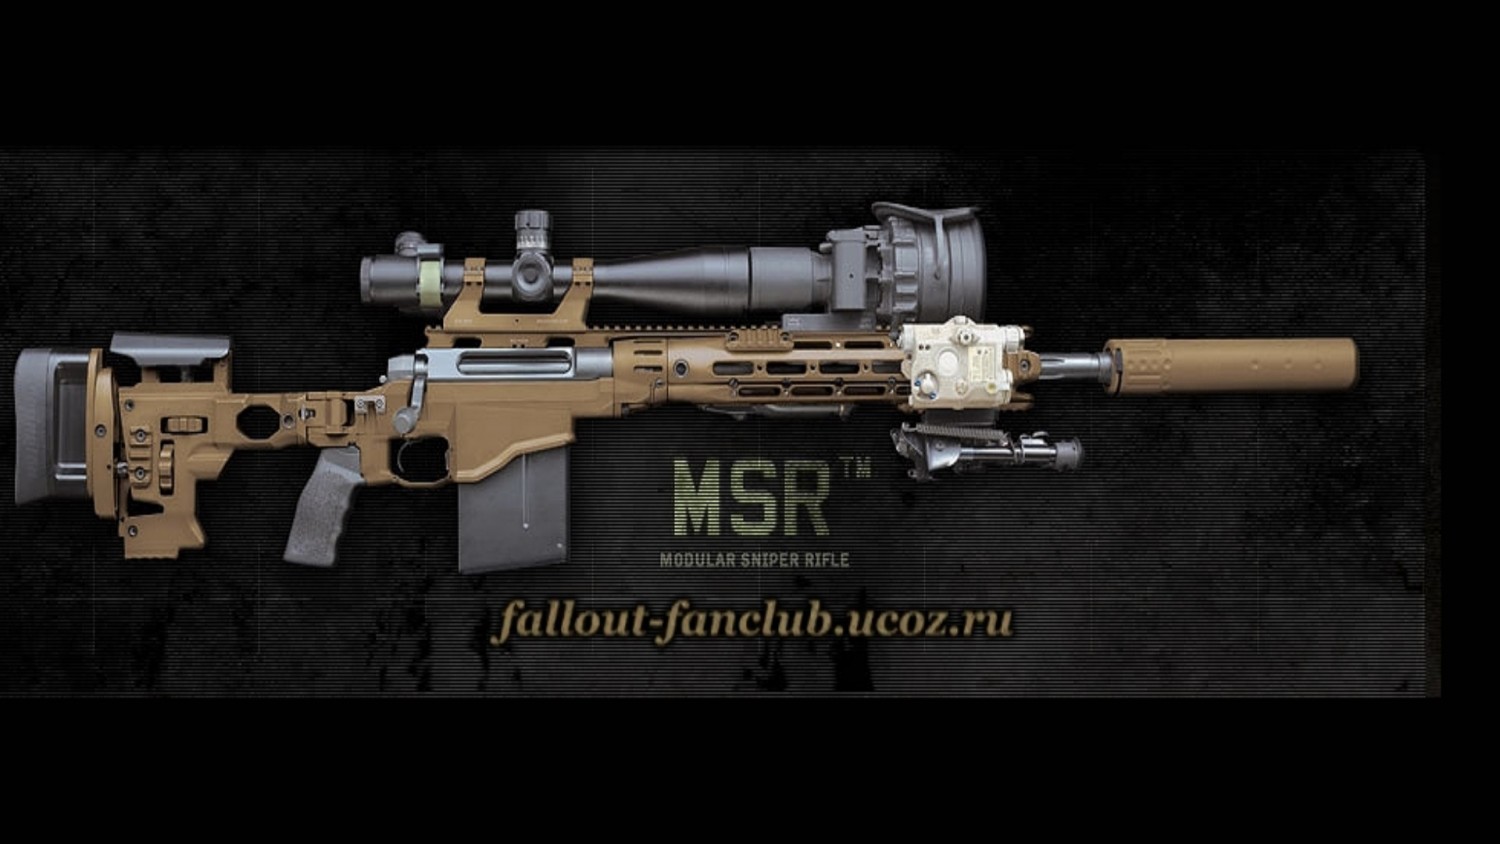 Fallout 4 модульная винтовка (120) фото